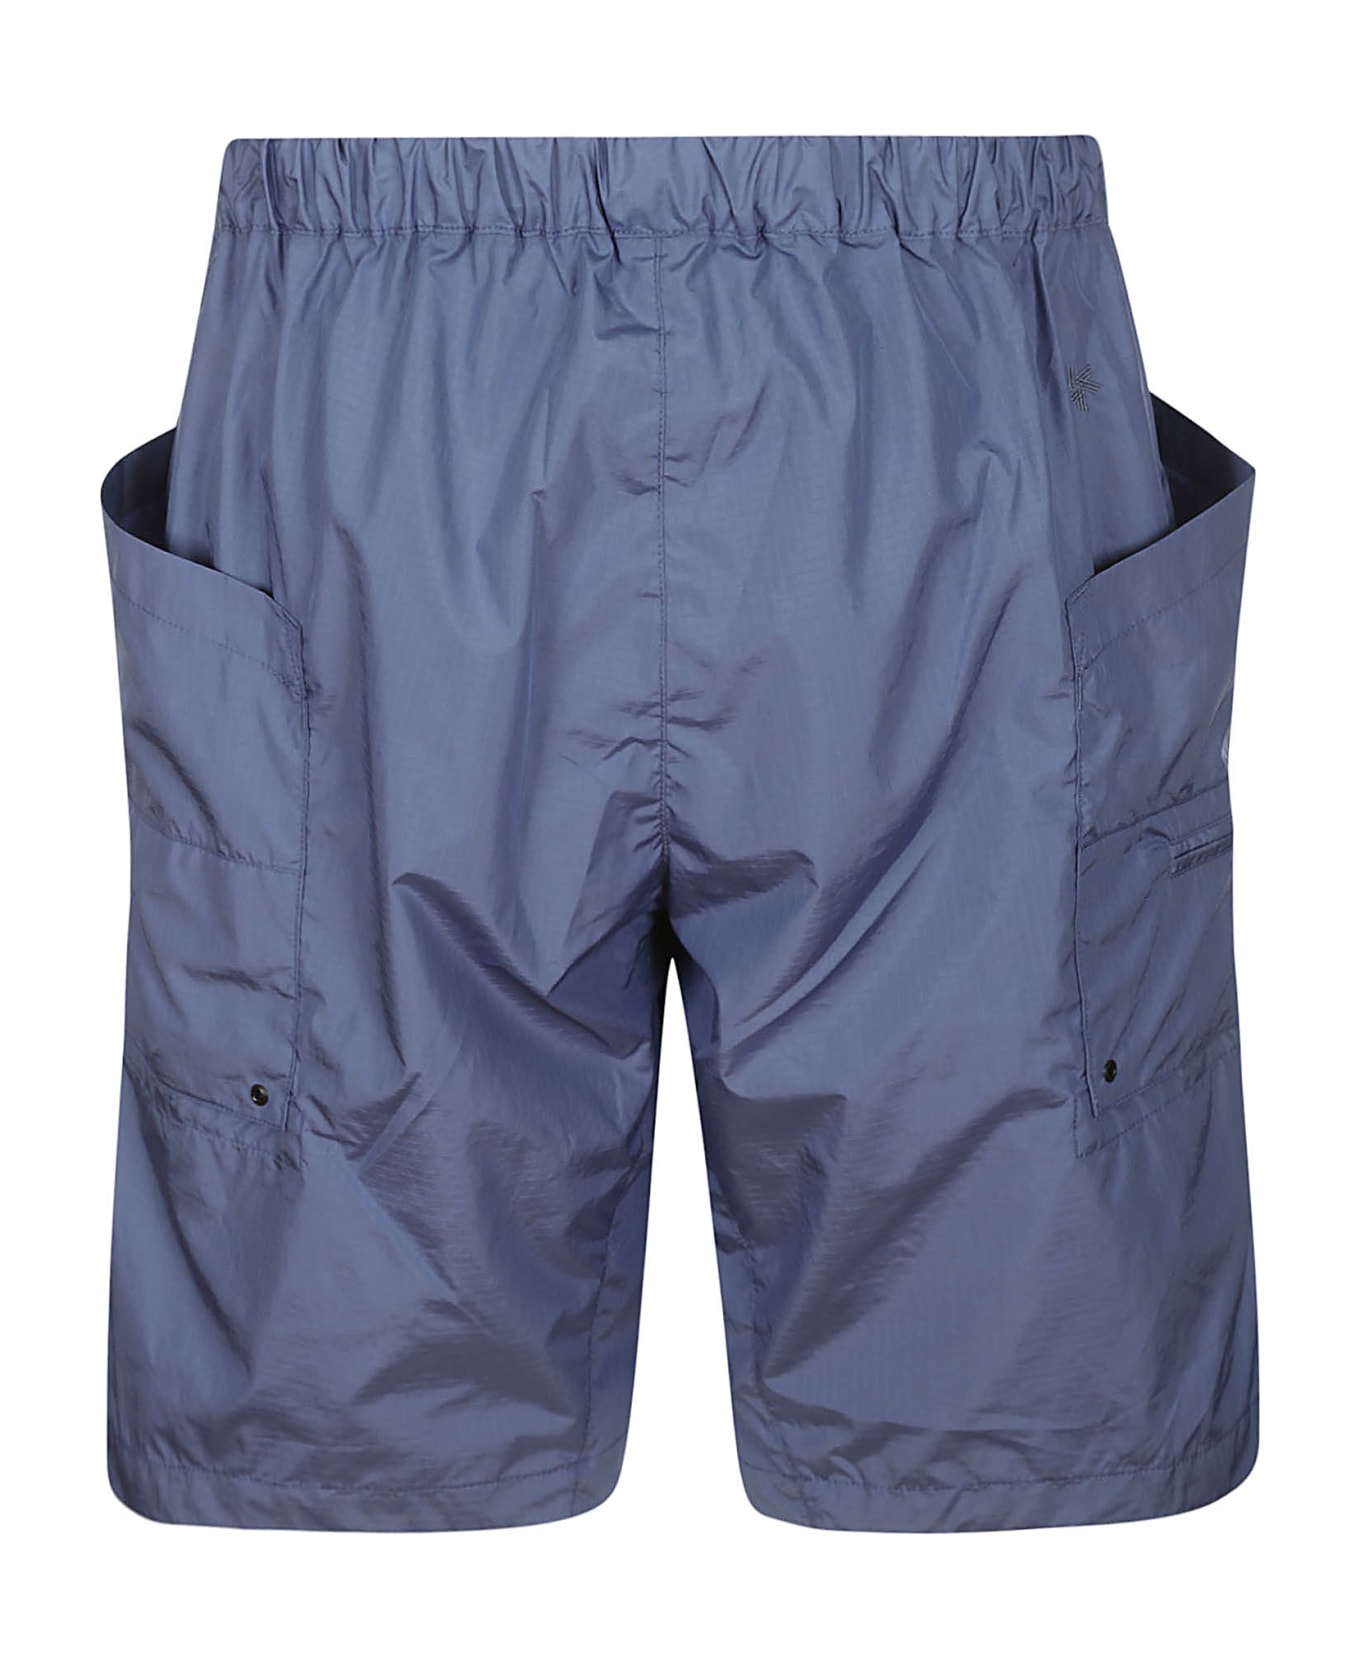 Goldwin Ripstop Cargo Shorts - Hb Horizon Blue ショートパンツ